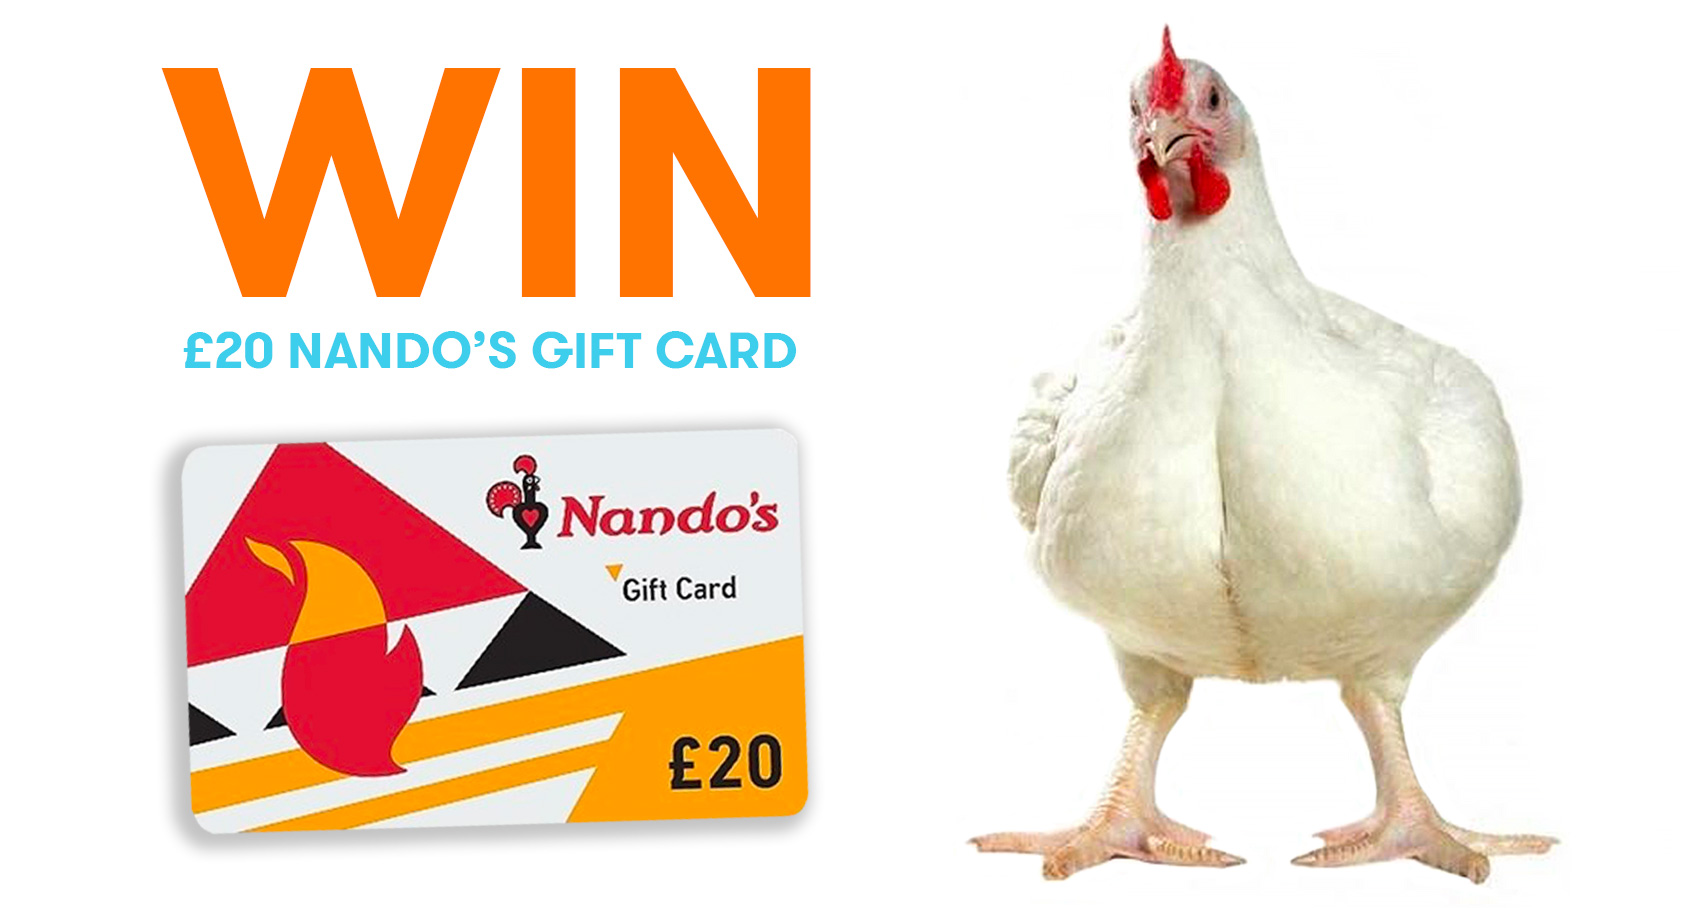 WIN a £20 Nando's Gift Card